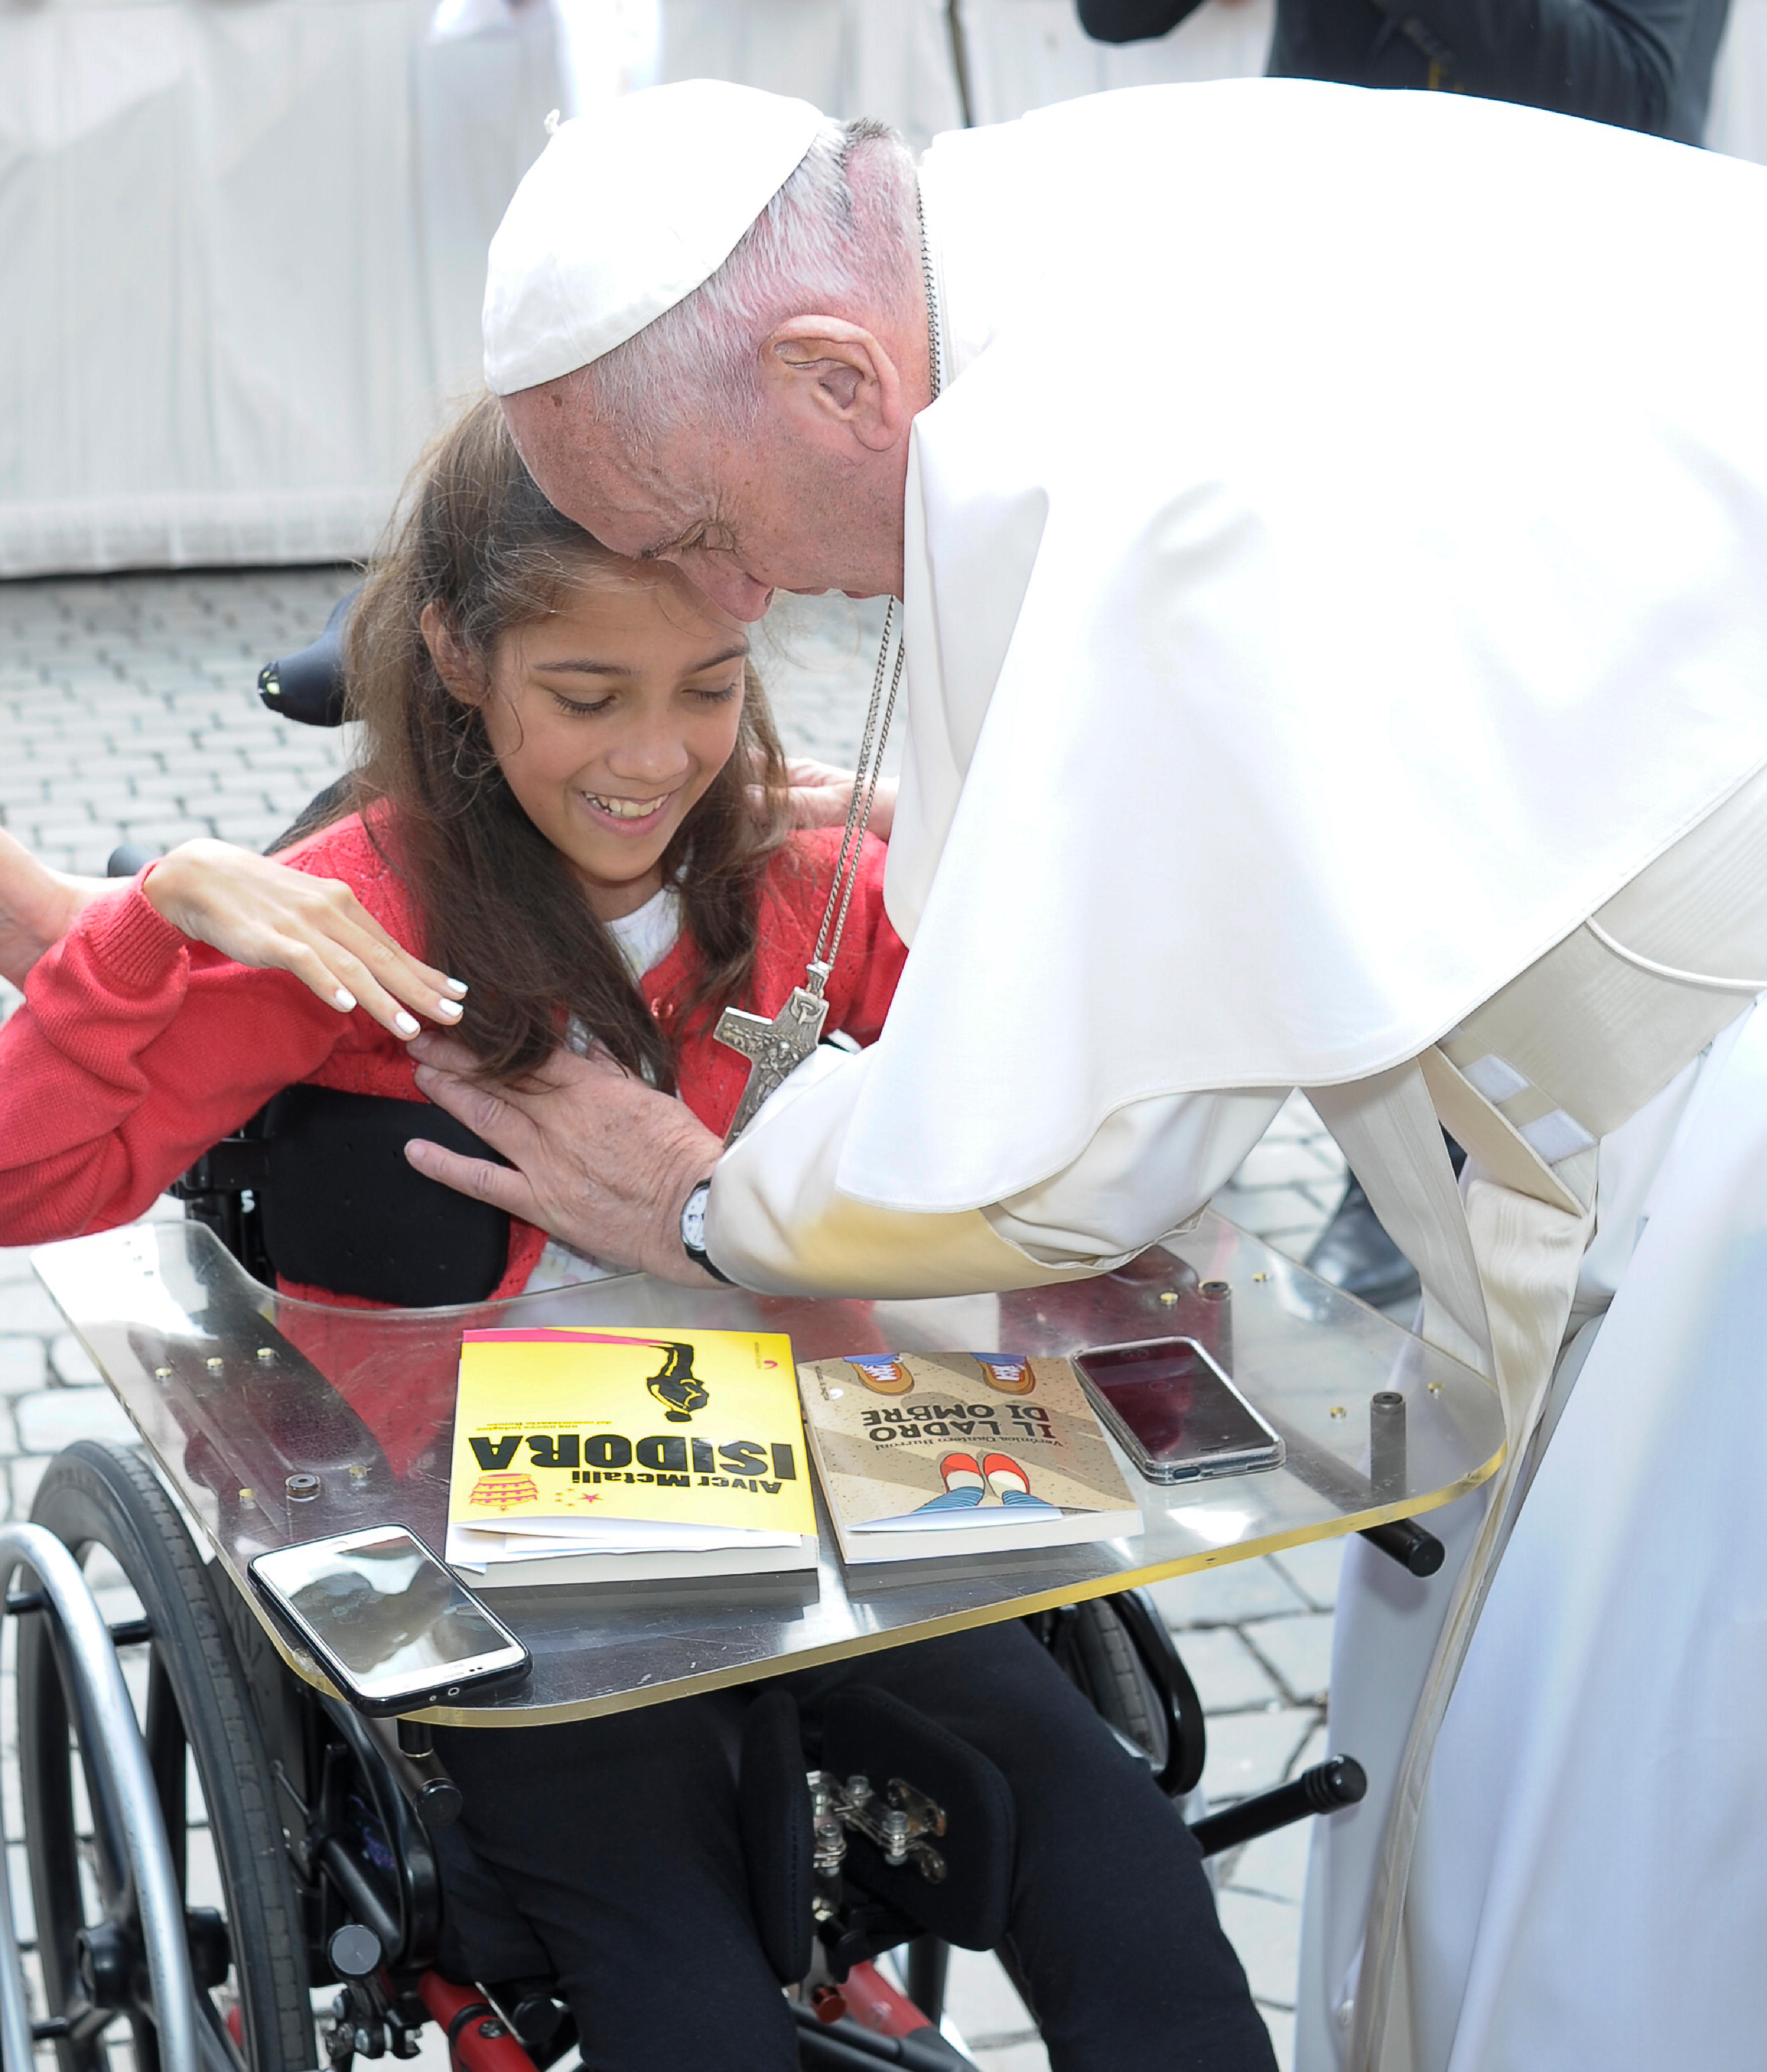 Veronica Cantero Burroni et le pape François, 1er juin 2016, L'Osservatore Romano